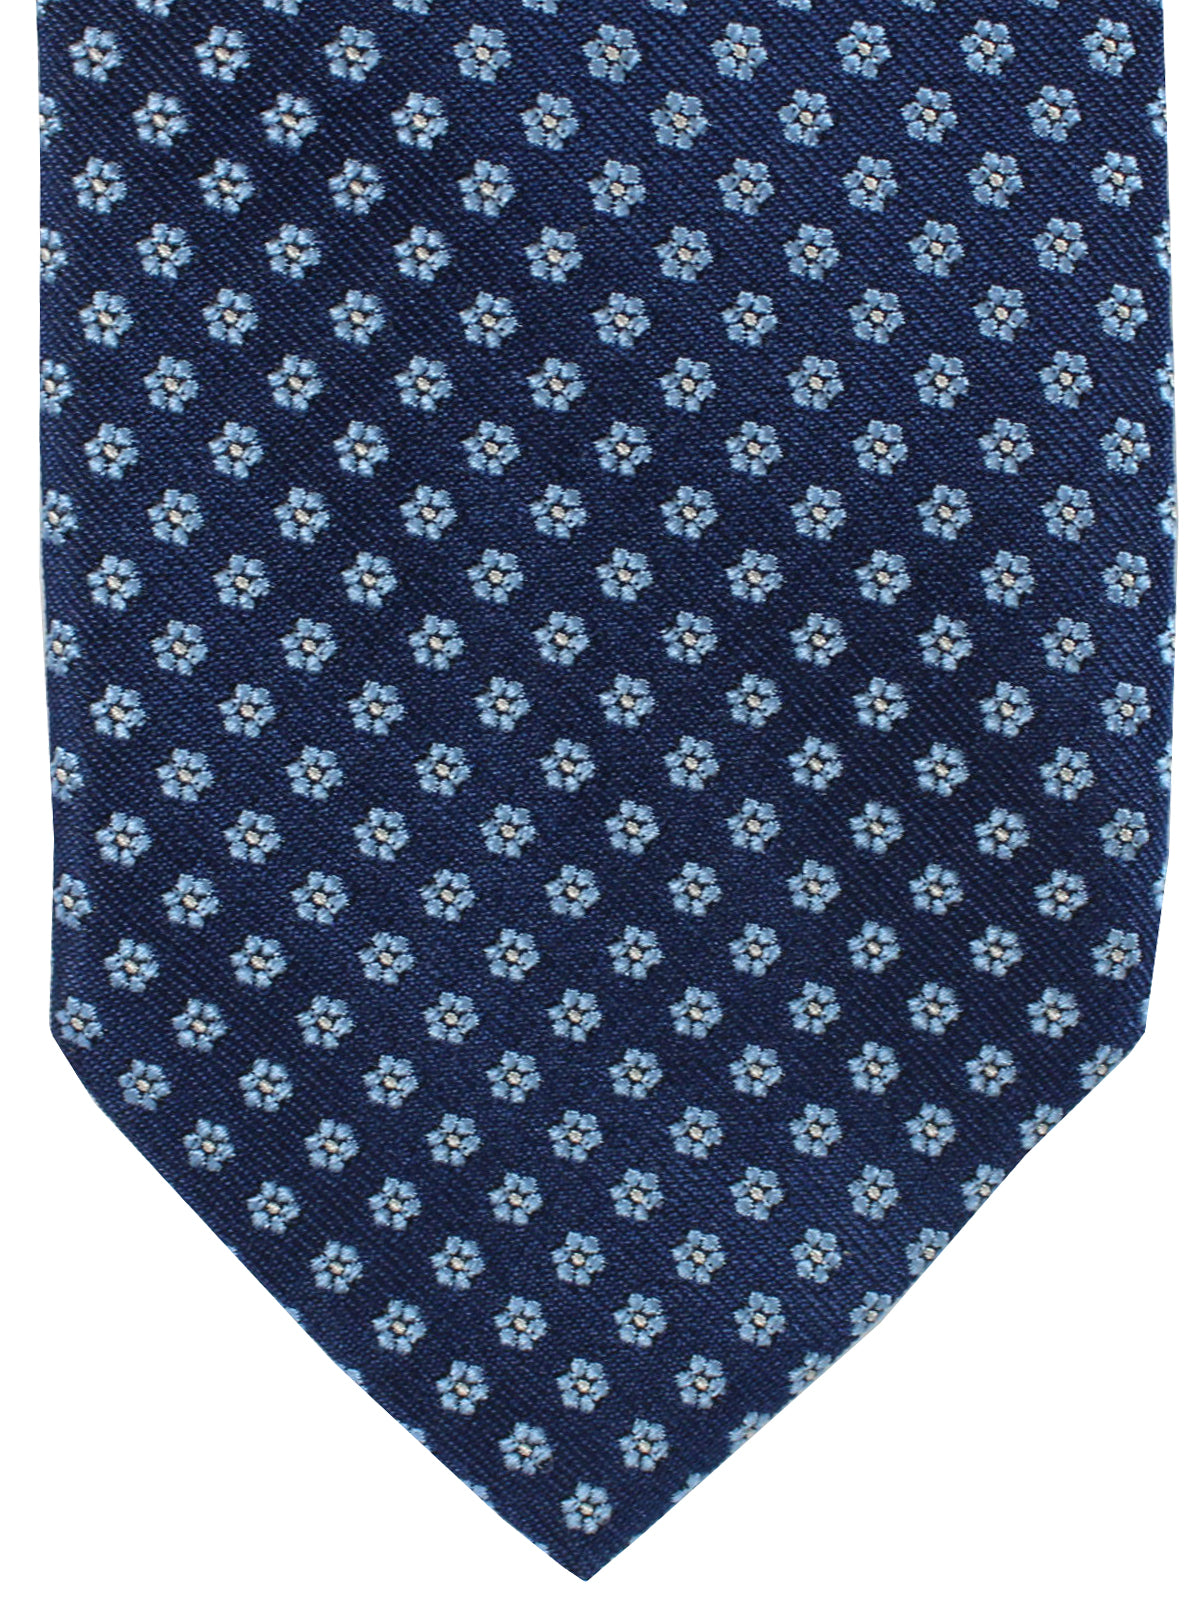 Massimo Valeri Extra Long Tie Navy Blue Floral